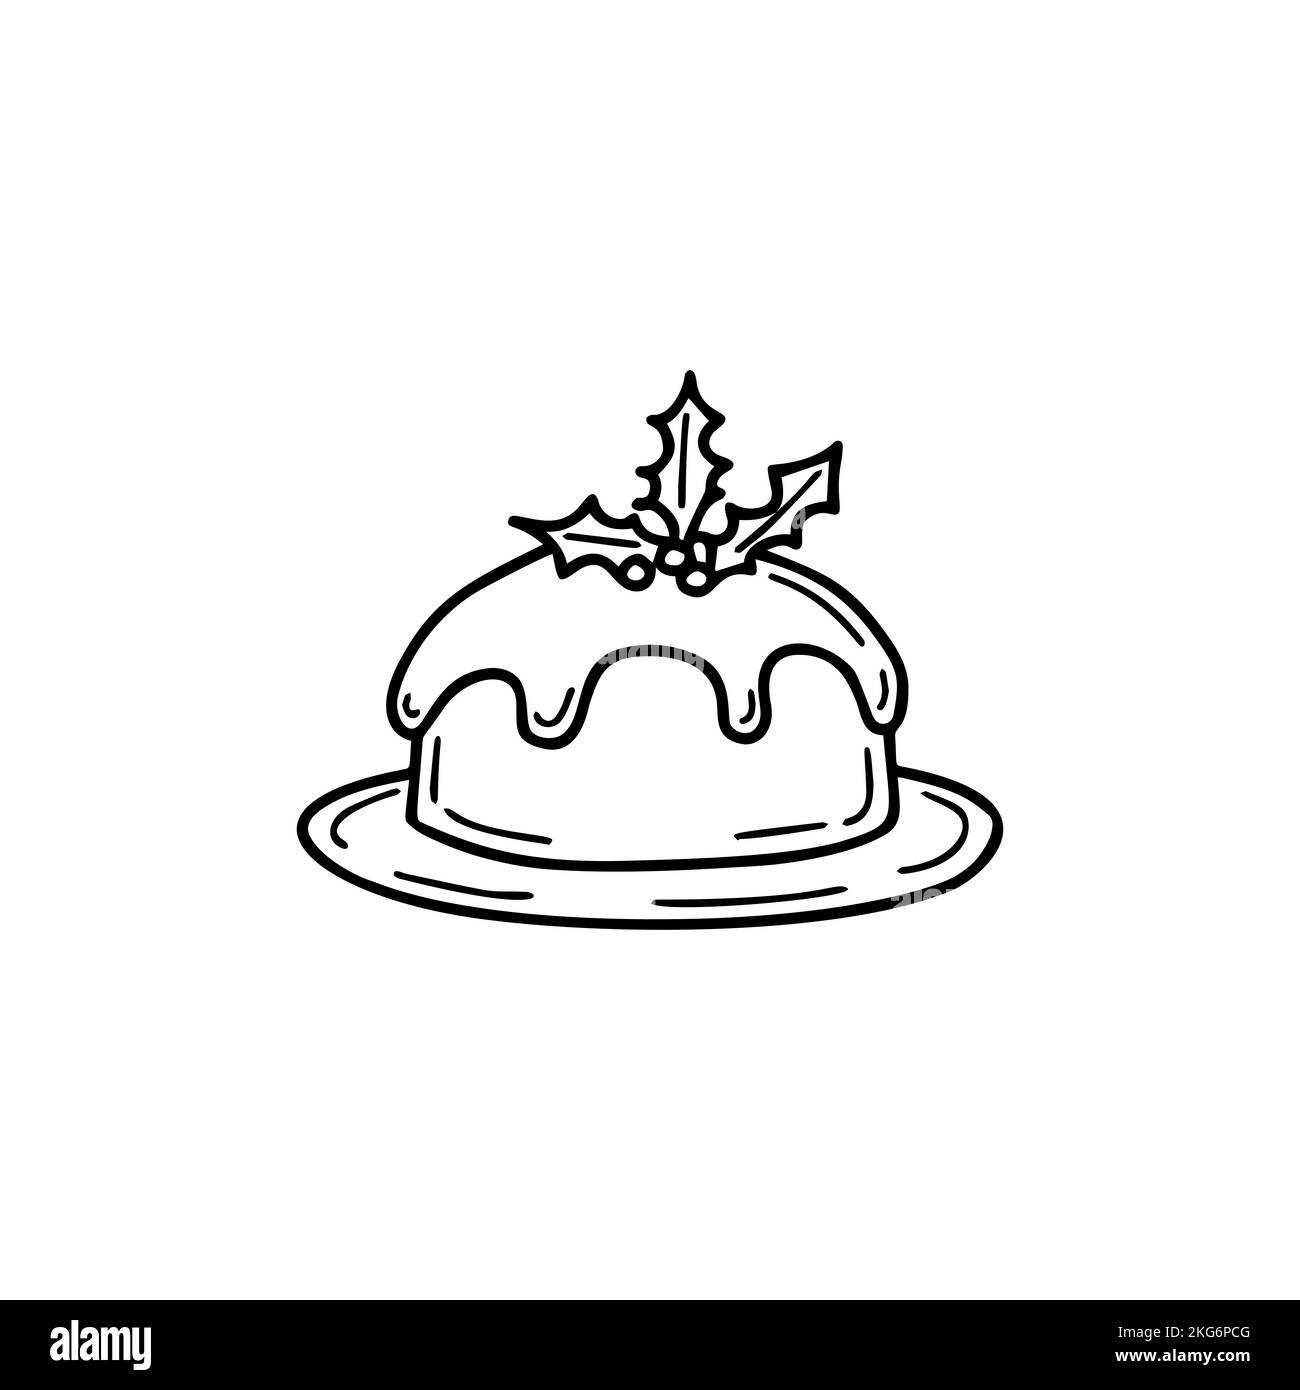 Cartoon Illustration Christmas Cake Pudding Black And White Stock